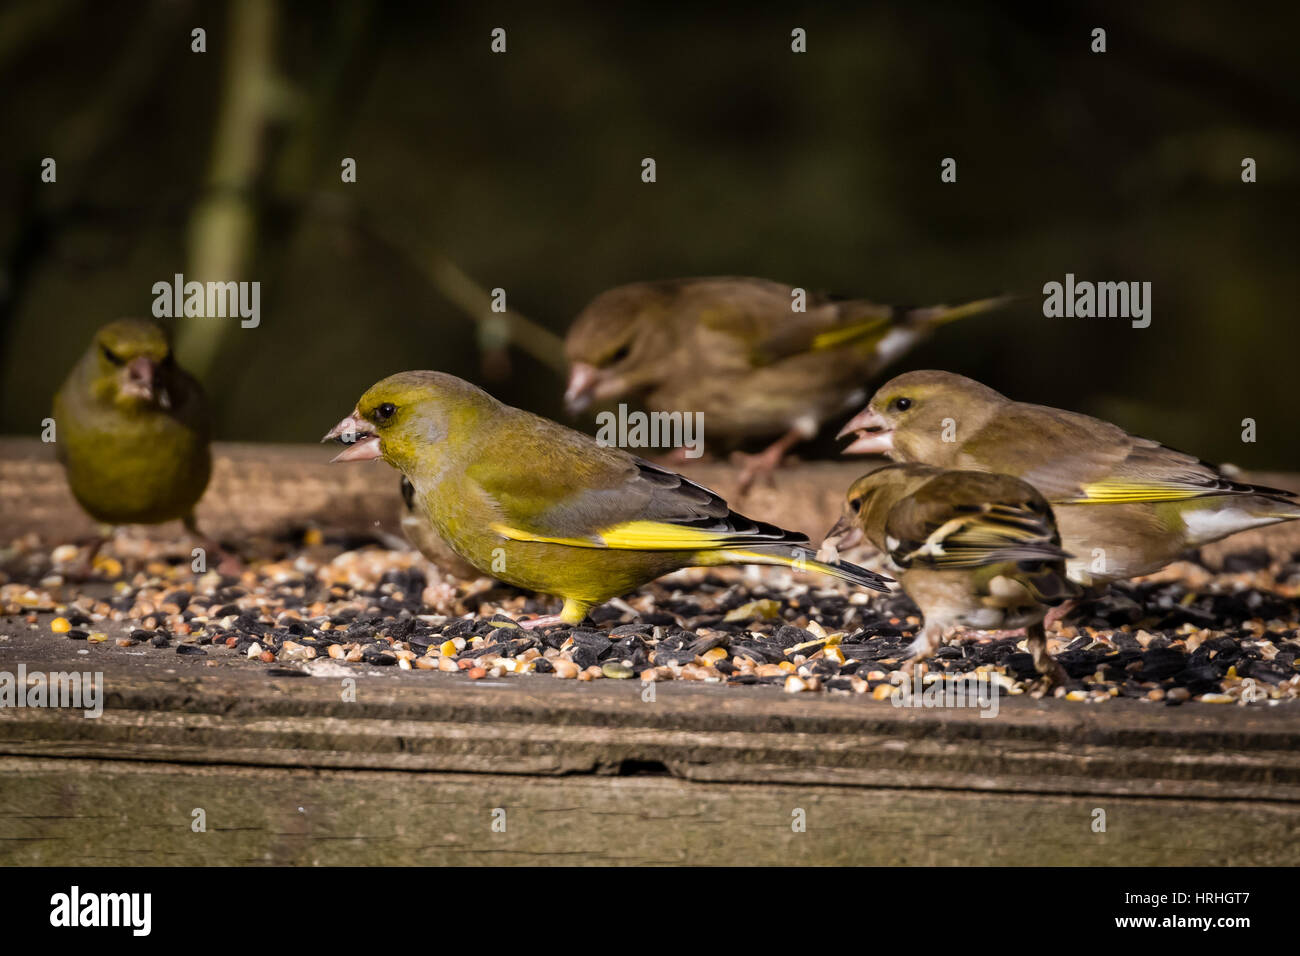 Finches on the bird feeder Stock Photo